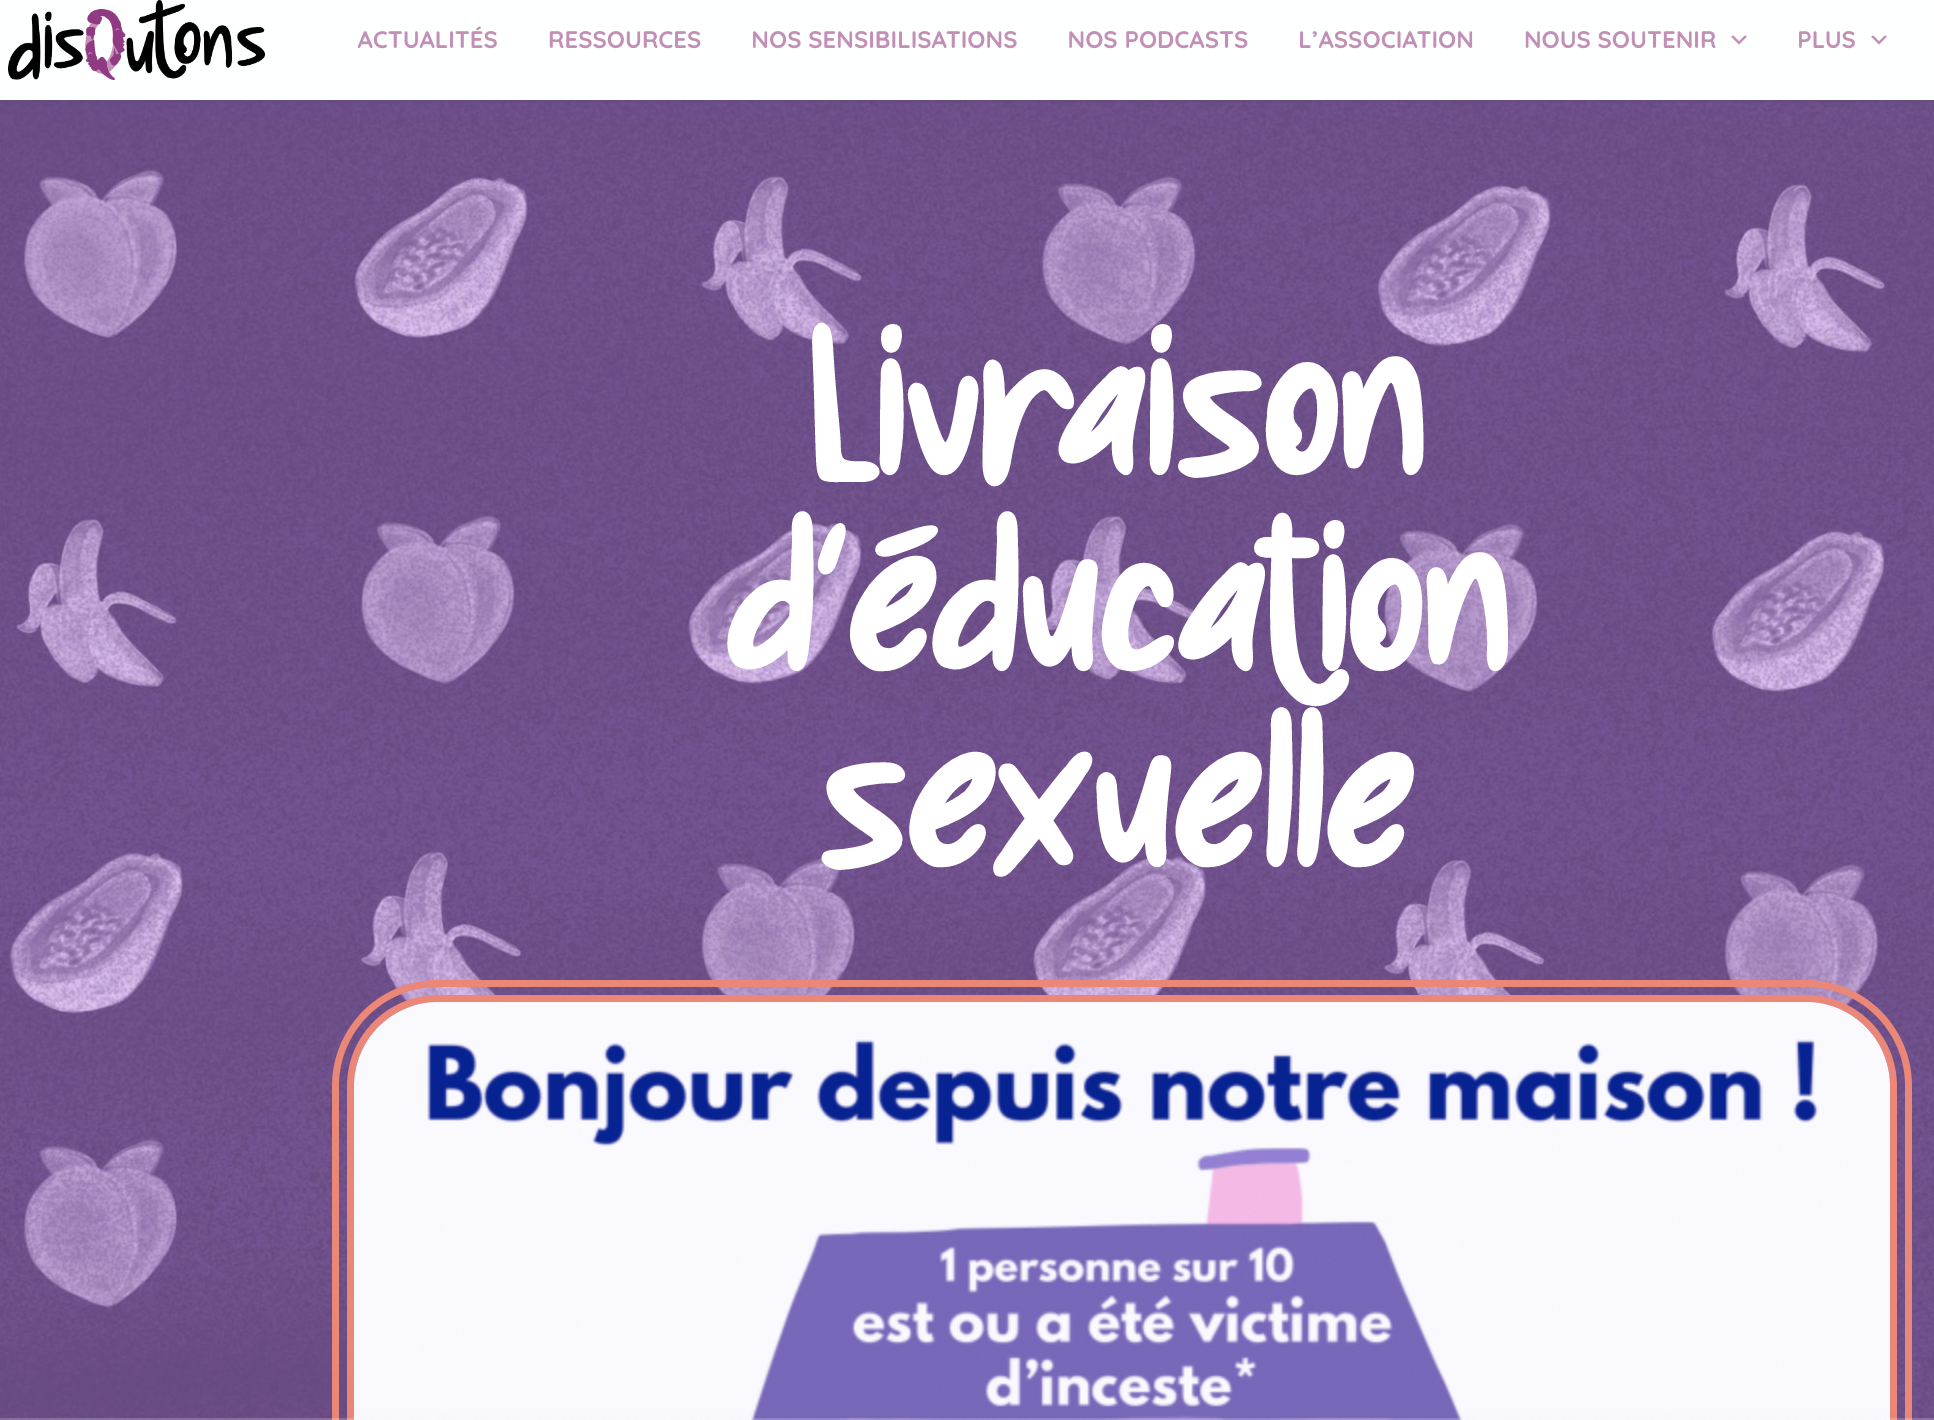 Site DisQutons.fr